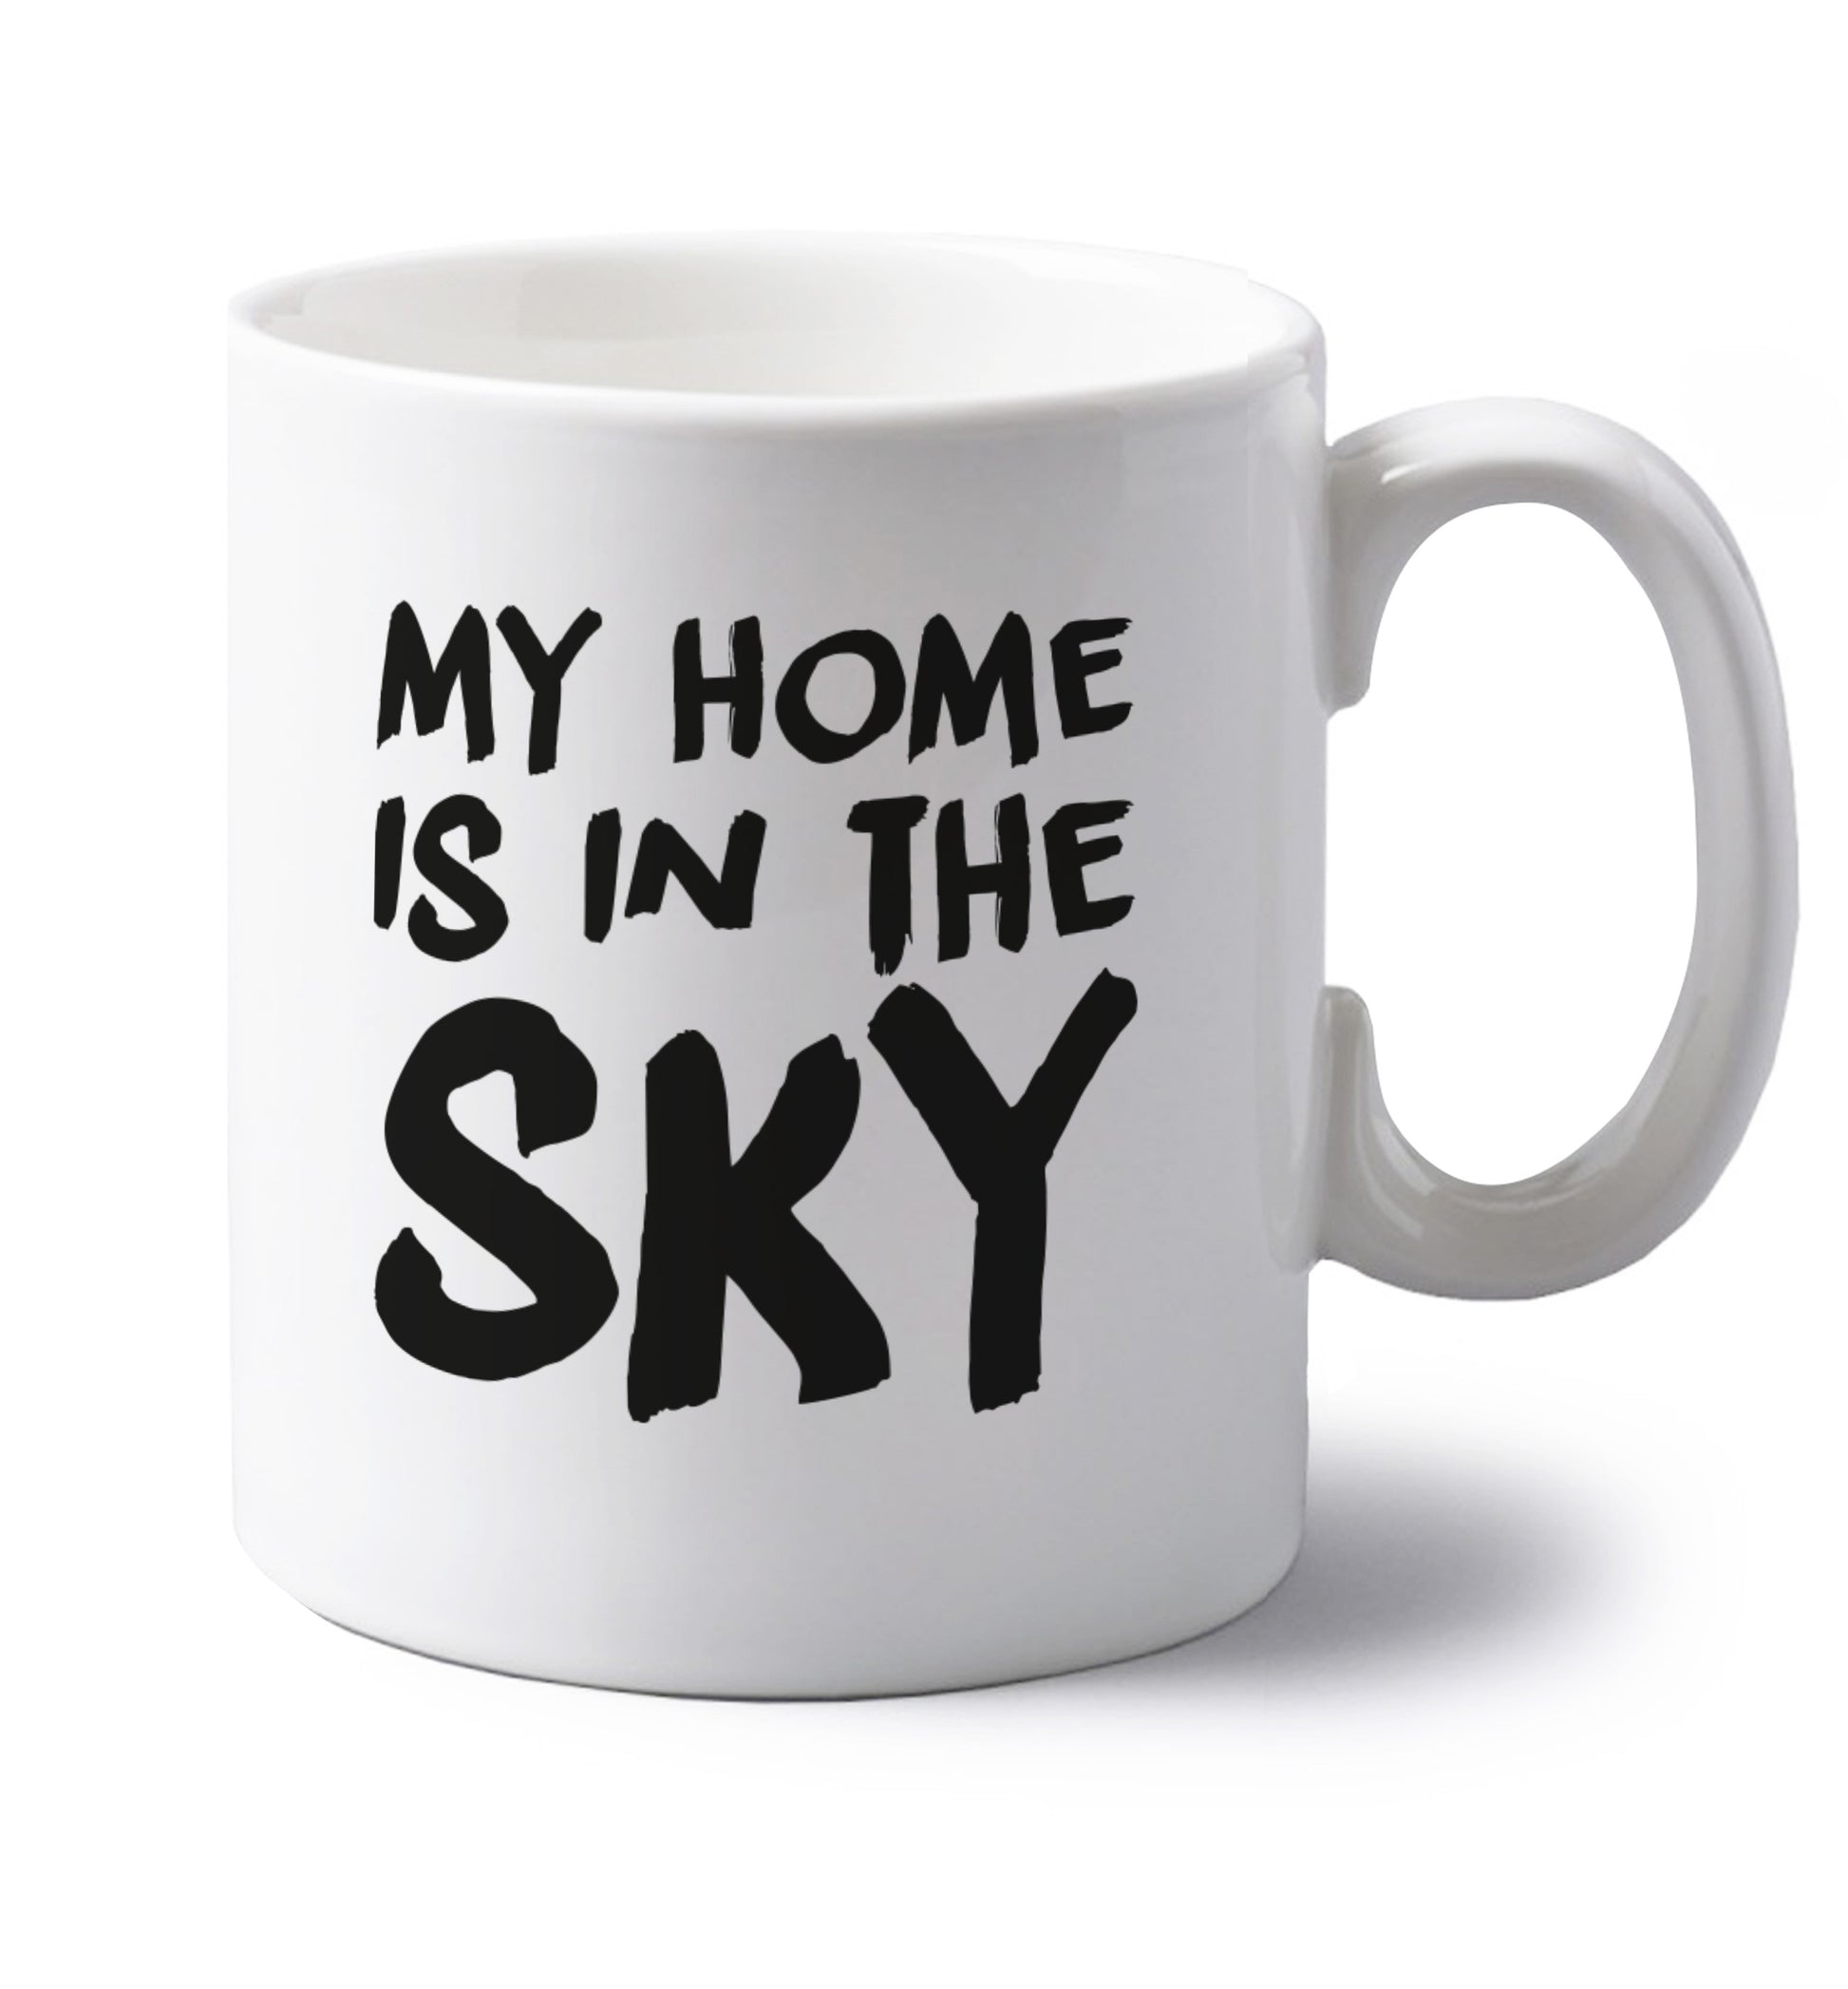 My home is in the sky left handed white ceramic mug 